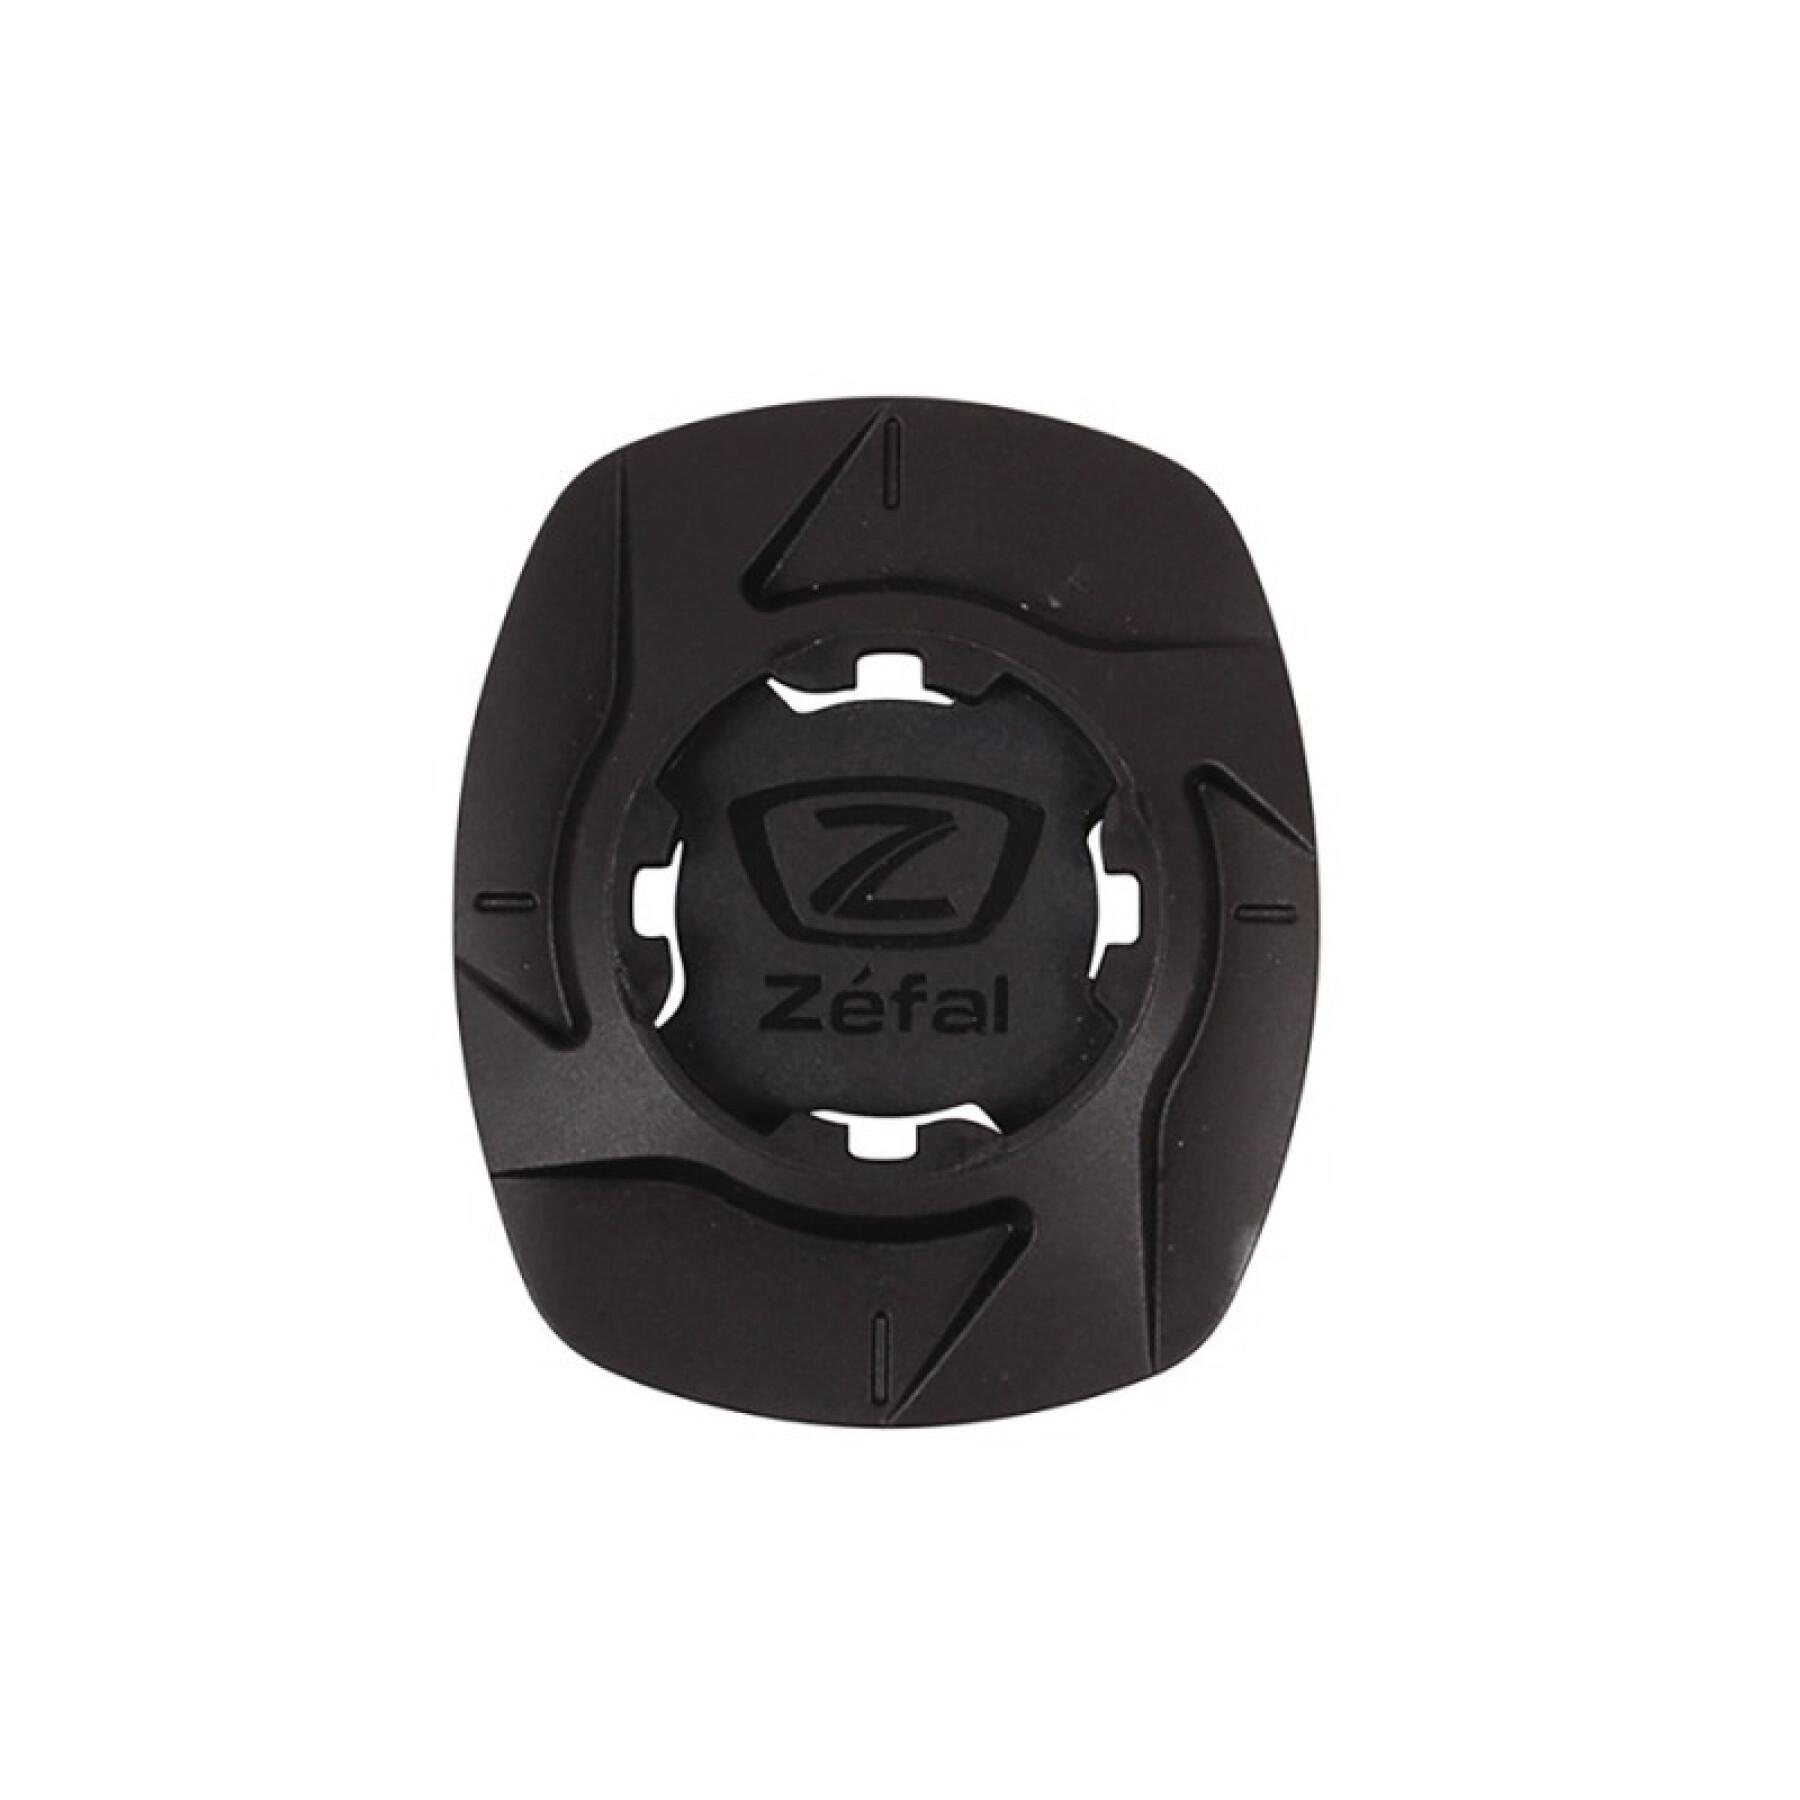 Adattatore universale per smartphone per supporti Zefal bike/handlebar/armand/car mount